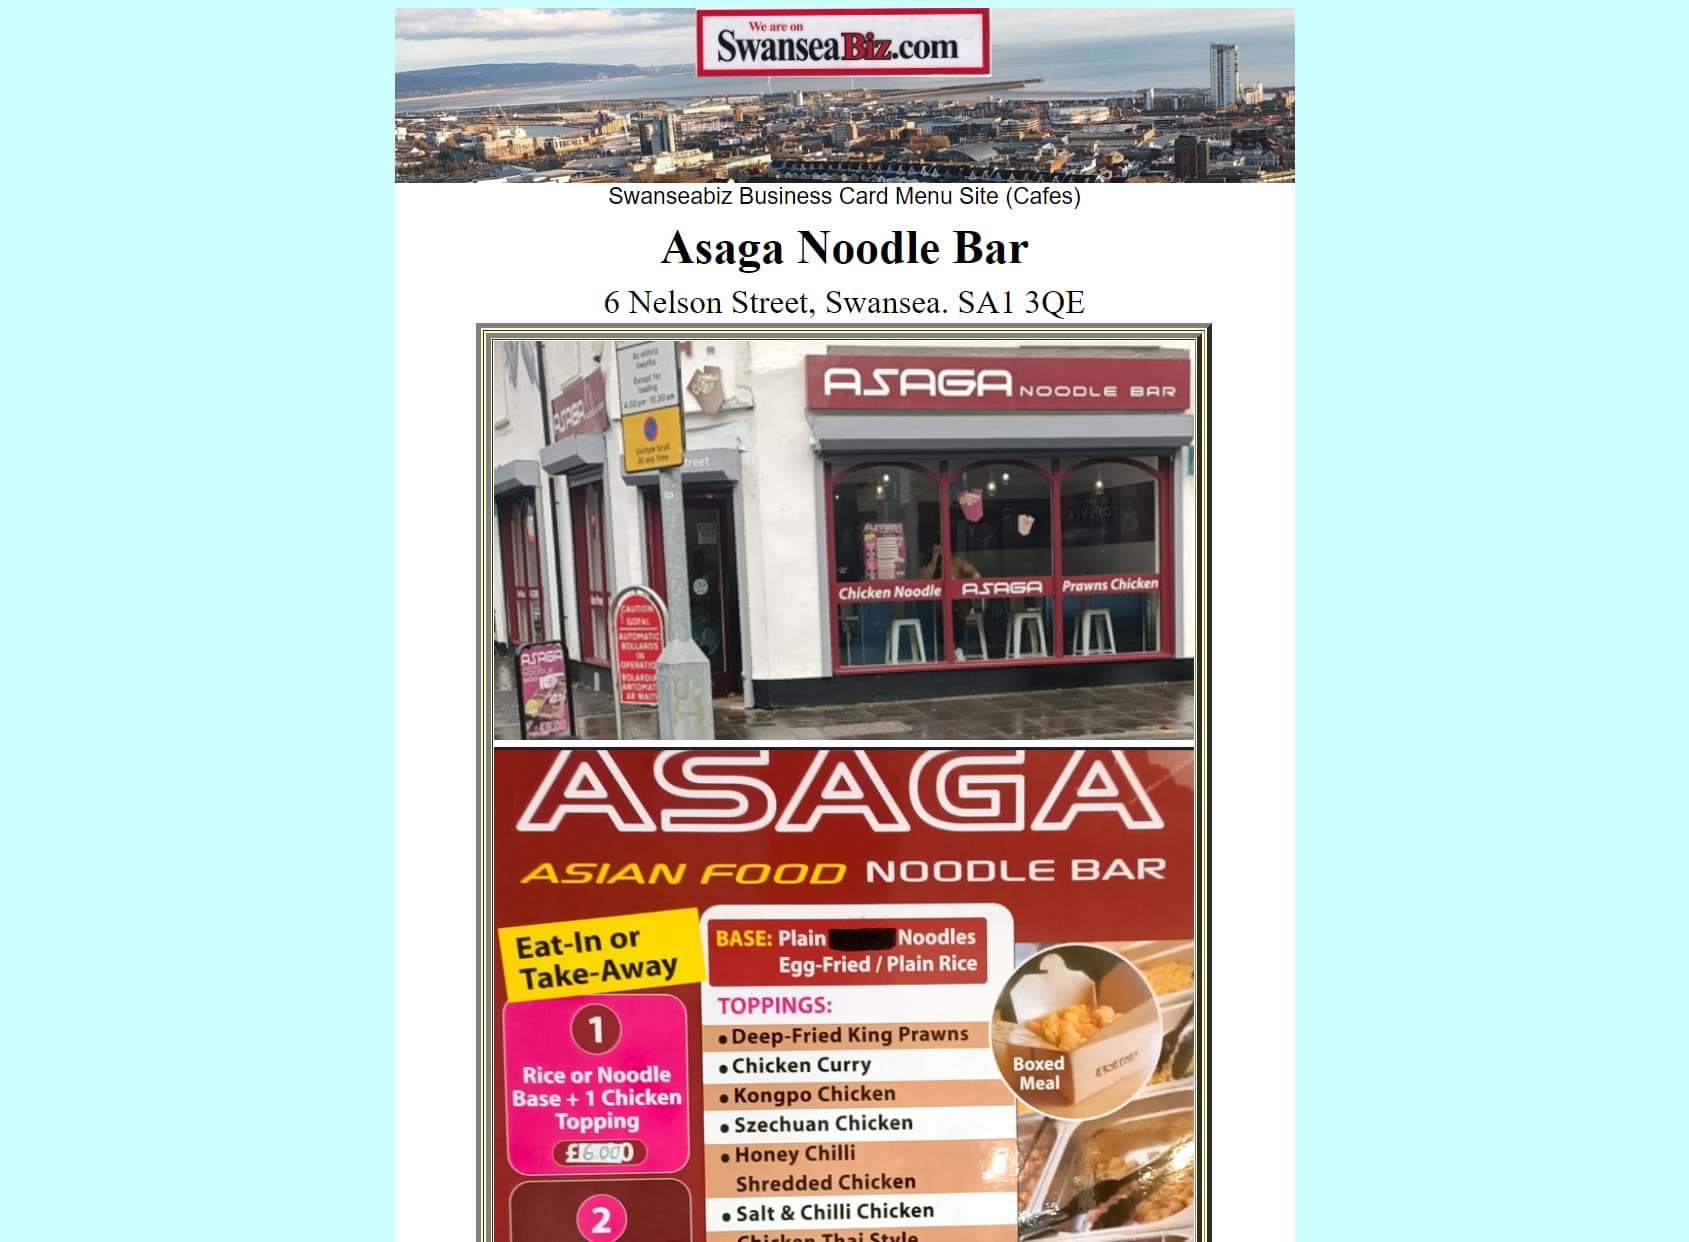 ASAGA Noodle Bar